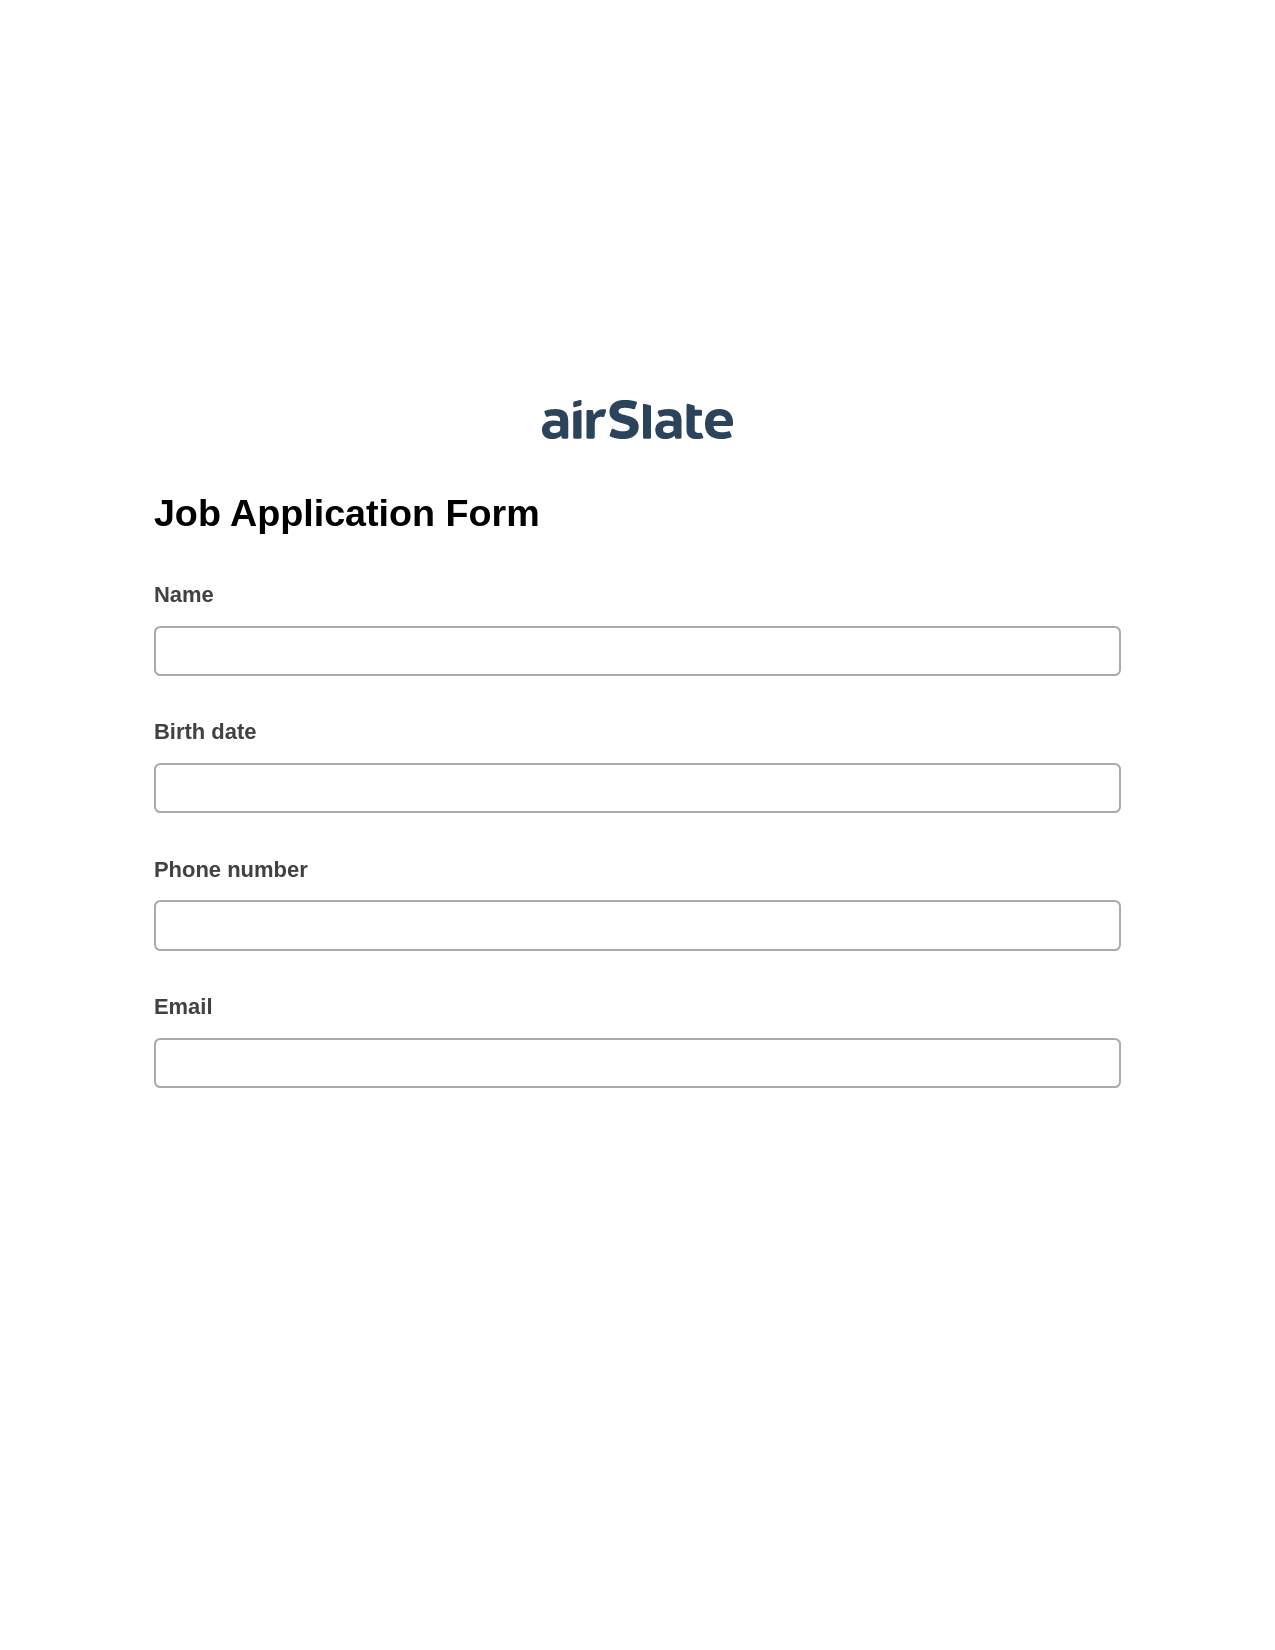 Job Application Form Pre-fill from Excel Spreadsheet Dropdown Options Bot, Google Calendar Bot, Google Drive Bot